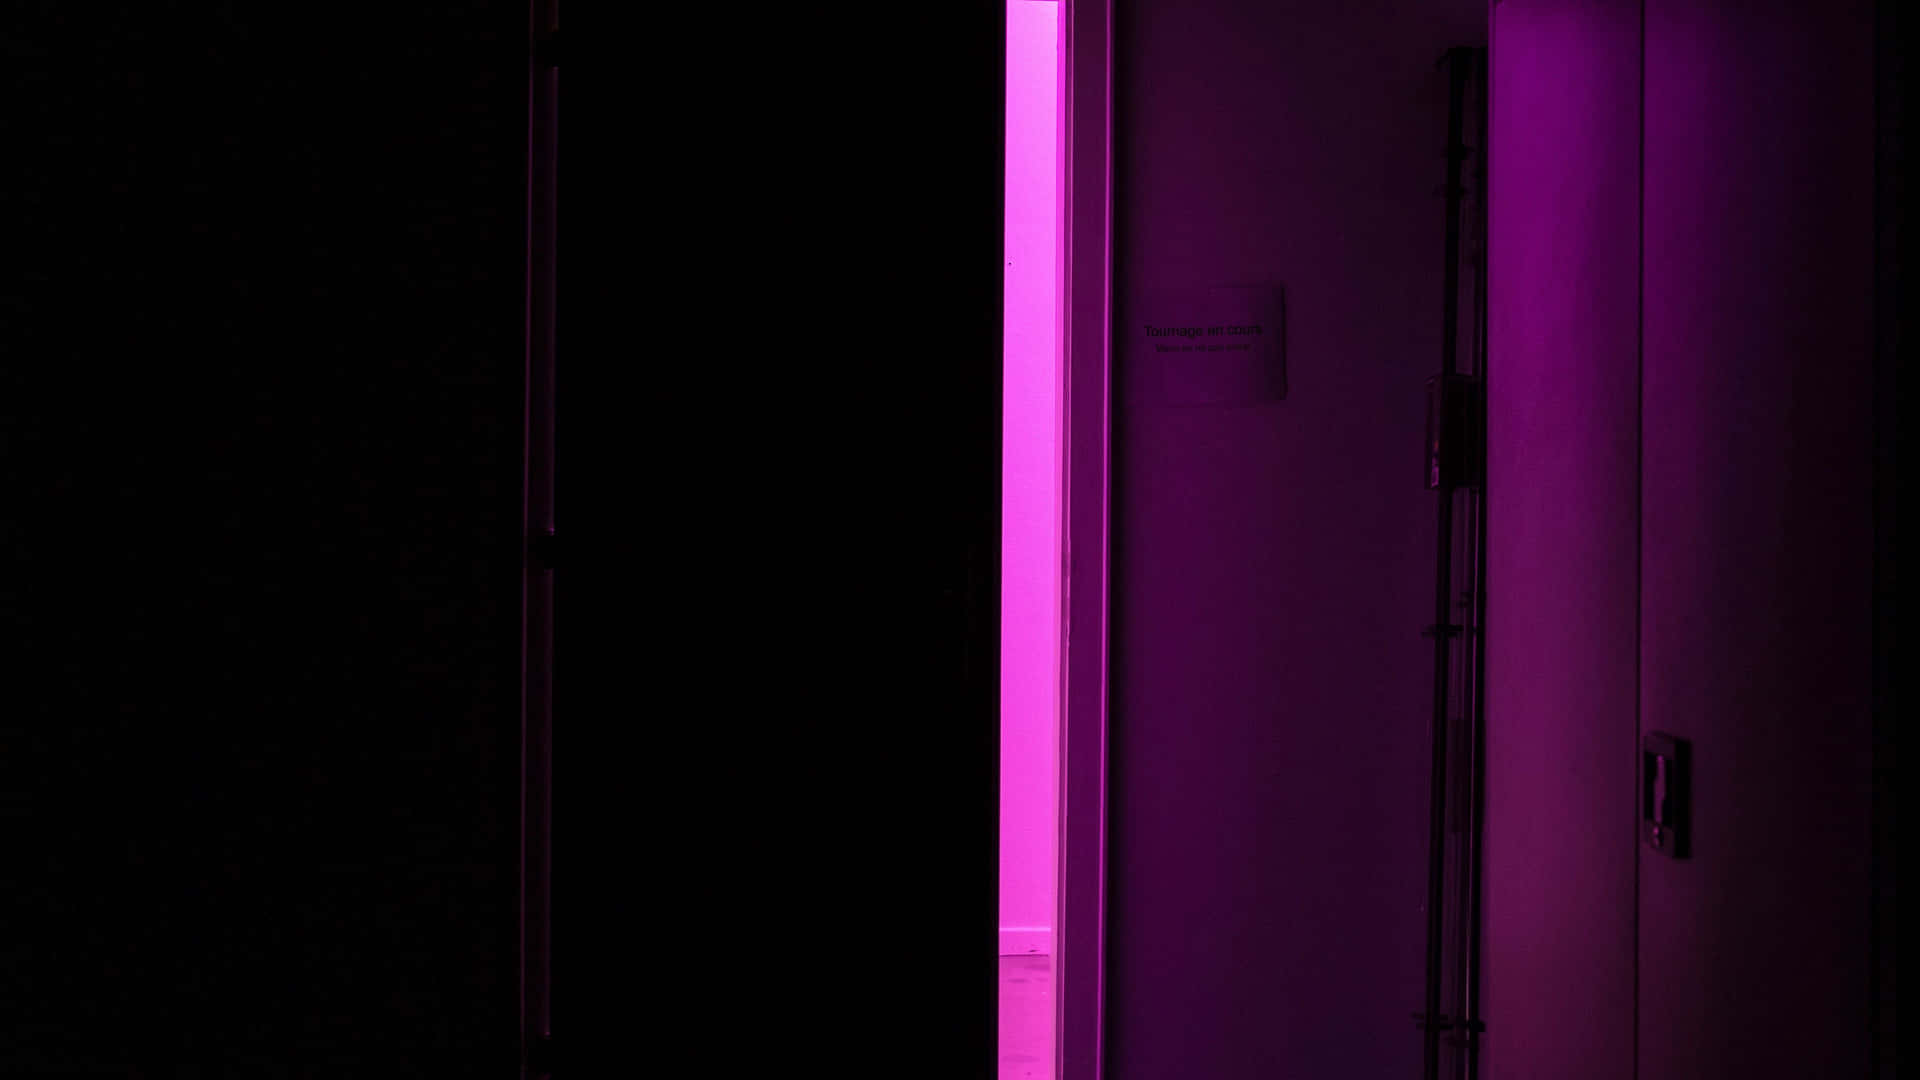 Download Dark Room with Artistic Lighting Wallpaper | Wallpapers.com